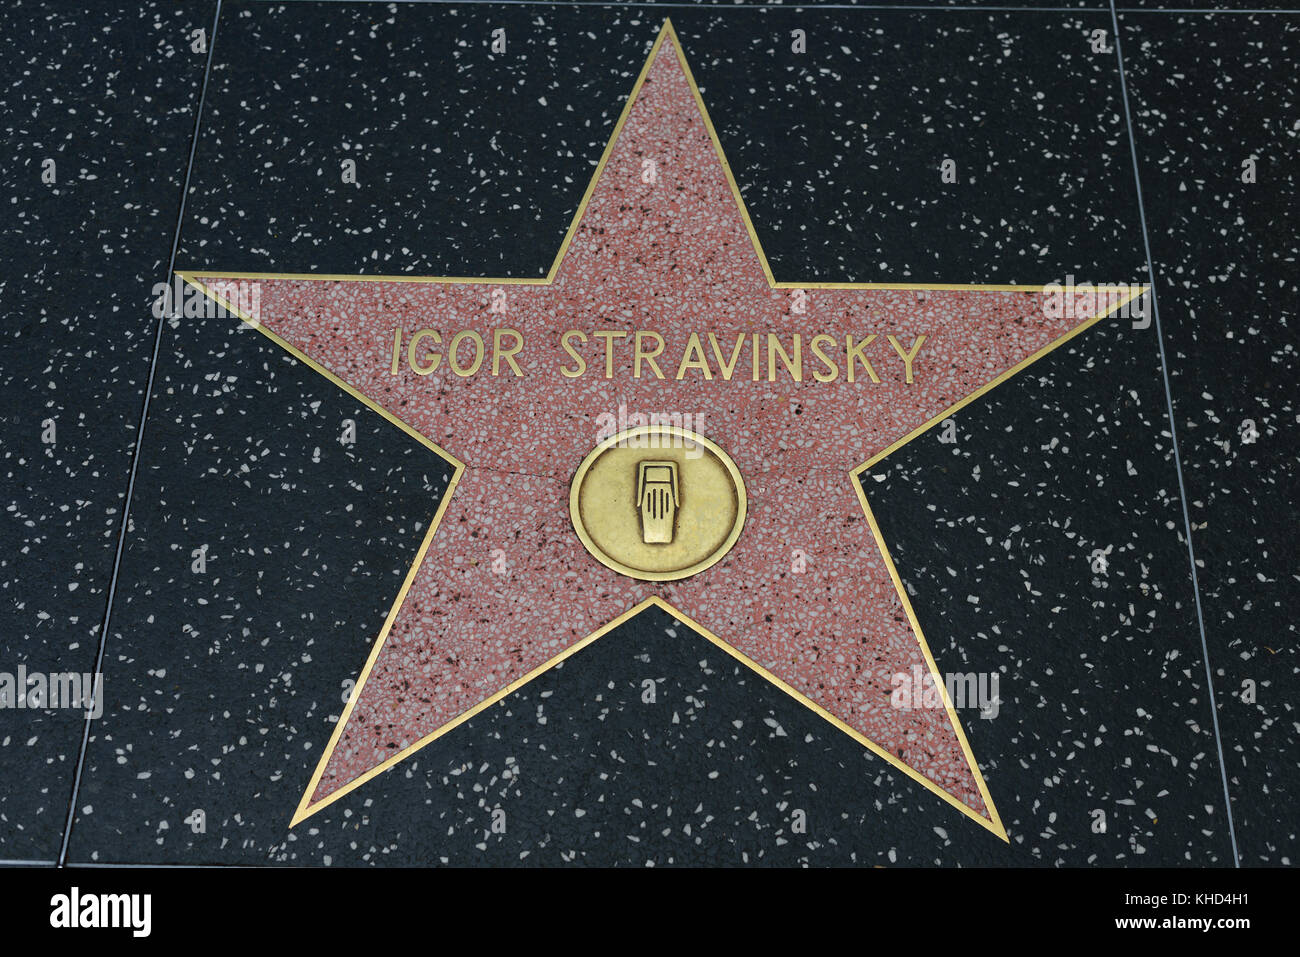 HOLLYWOOD, CA - DEZEMBER 06: Igor Strawinsky Star auf dem Hollywood Walk of Fame in Hollywood, Kalifornien am 6. Dezember 2016. Stockfoto